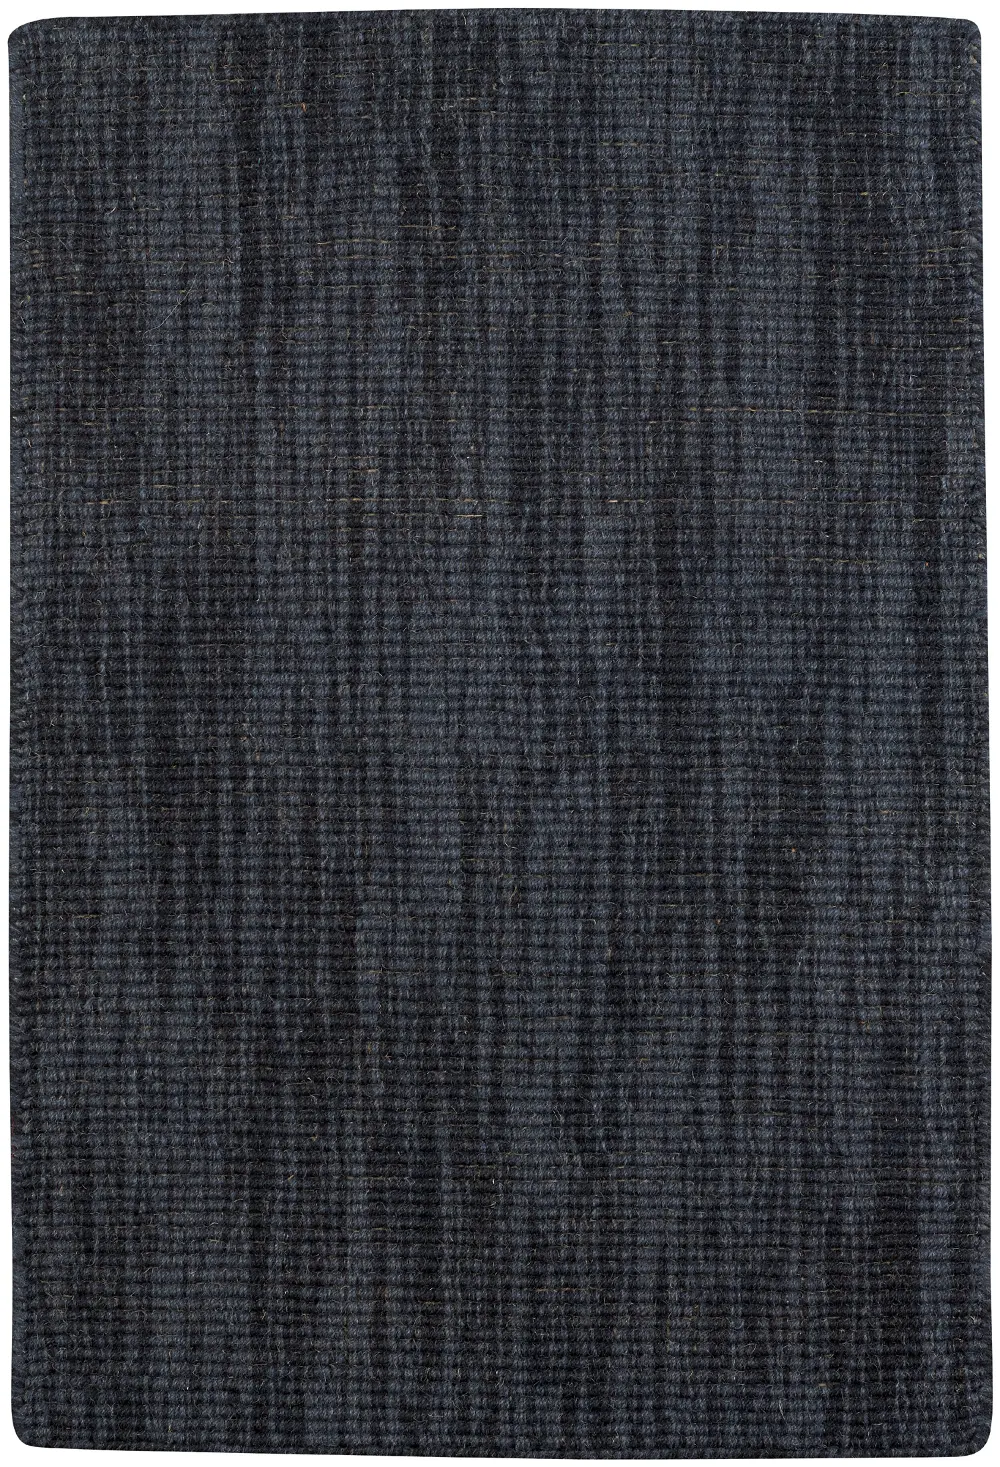 9532RSO58375 5 x 8 Medium Flat Weave Coal Gray Area Rug - Montauk ll-1